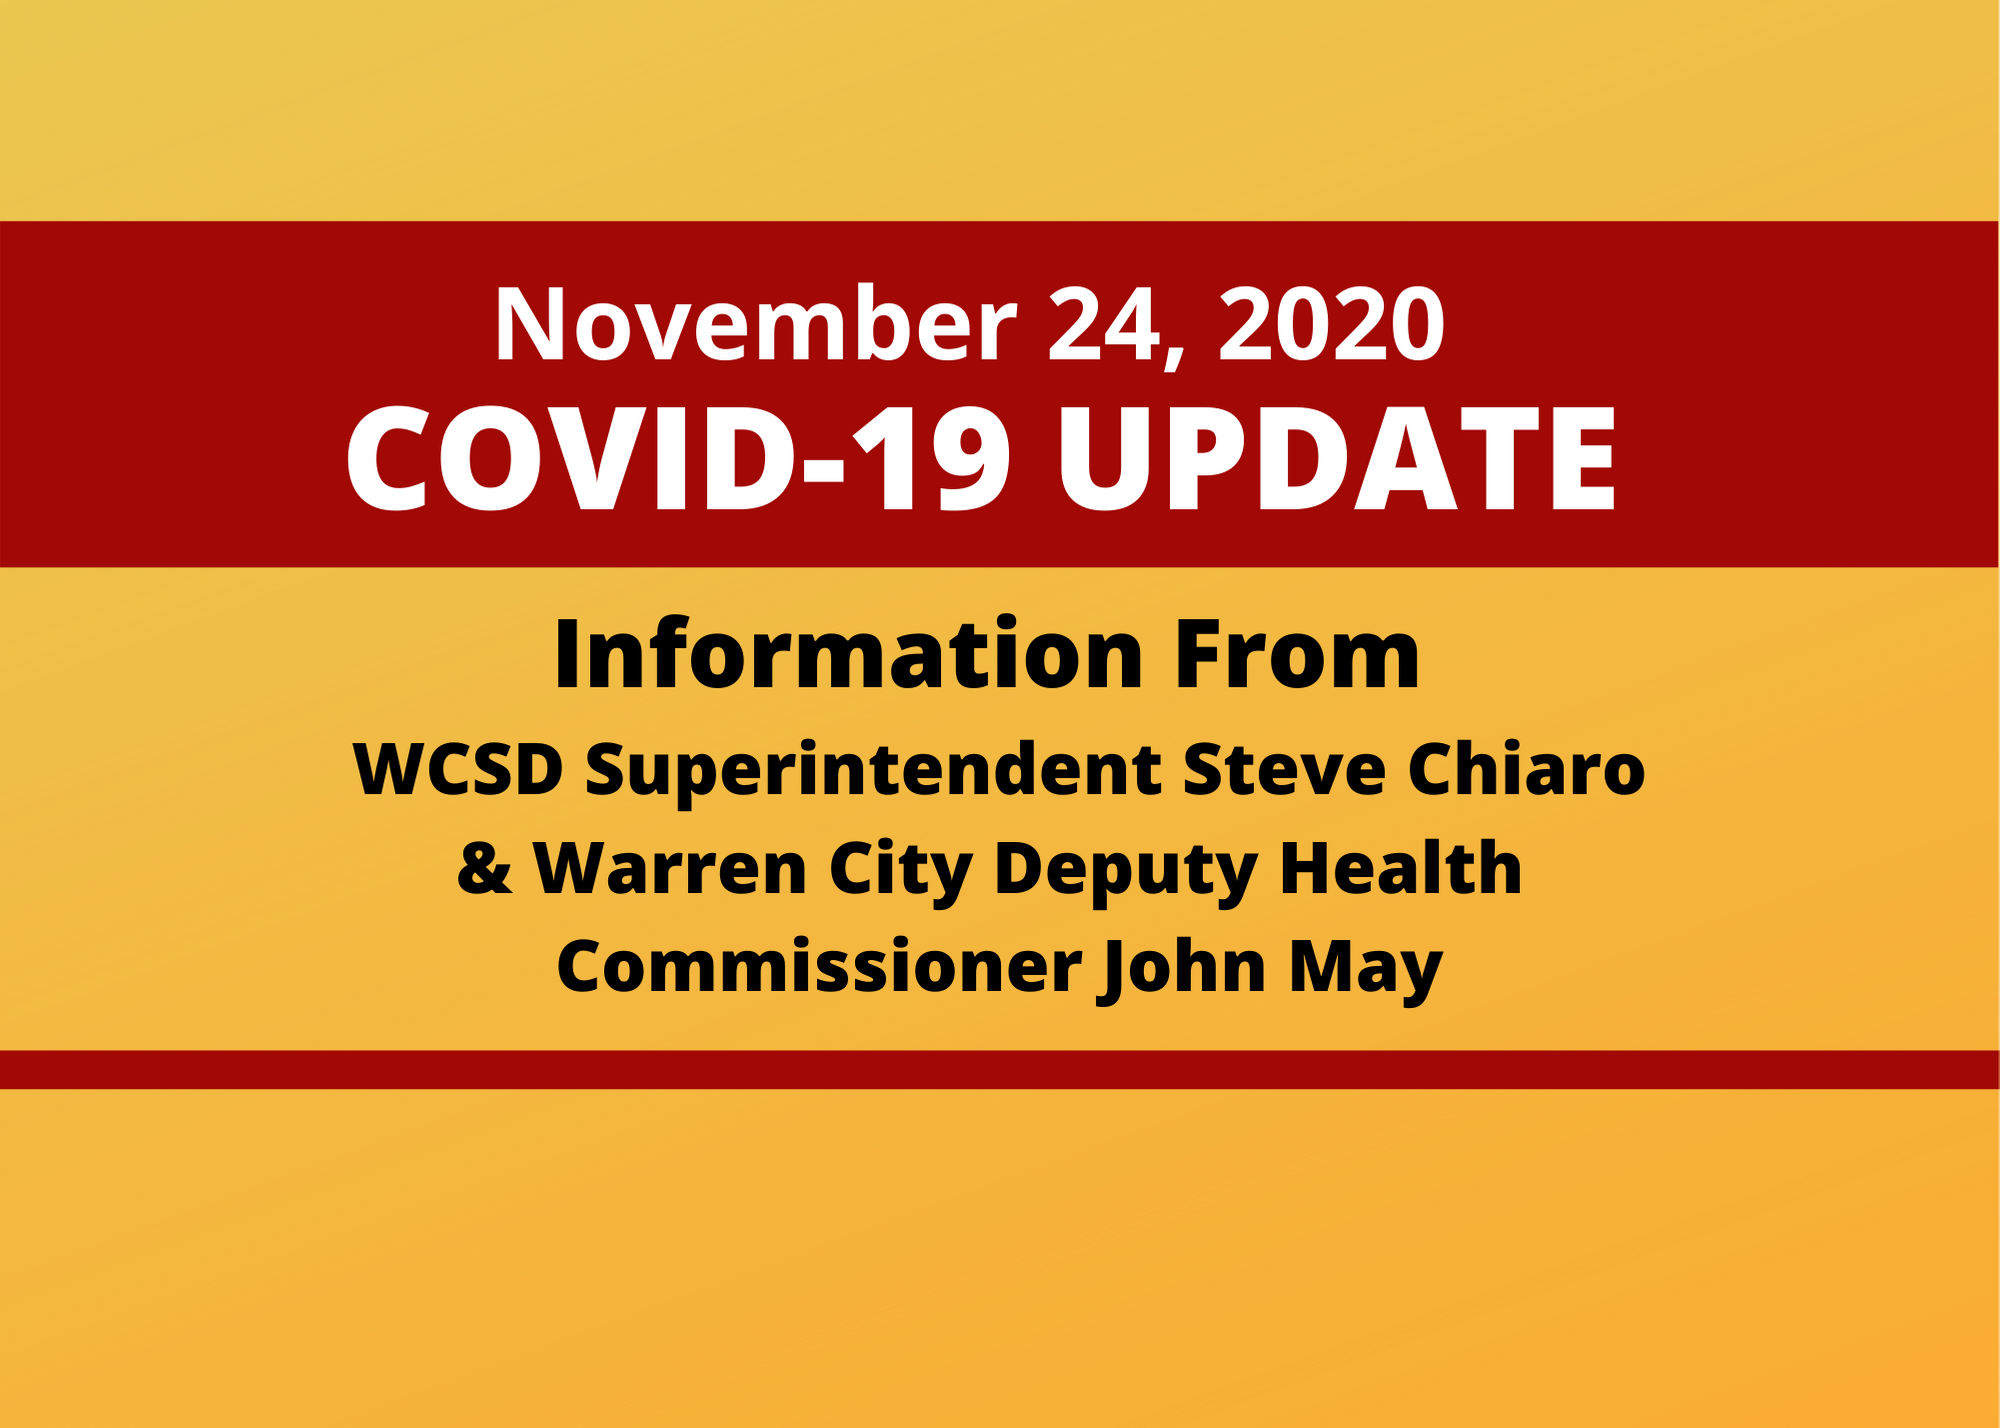 Information From Superintendent Steve Chiaro & Warren City Deputy Health Commissioner John May